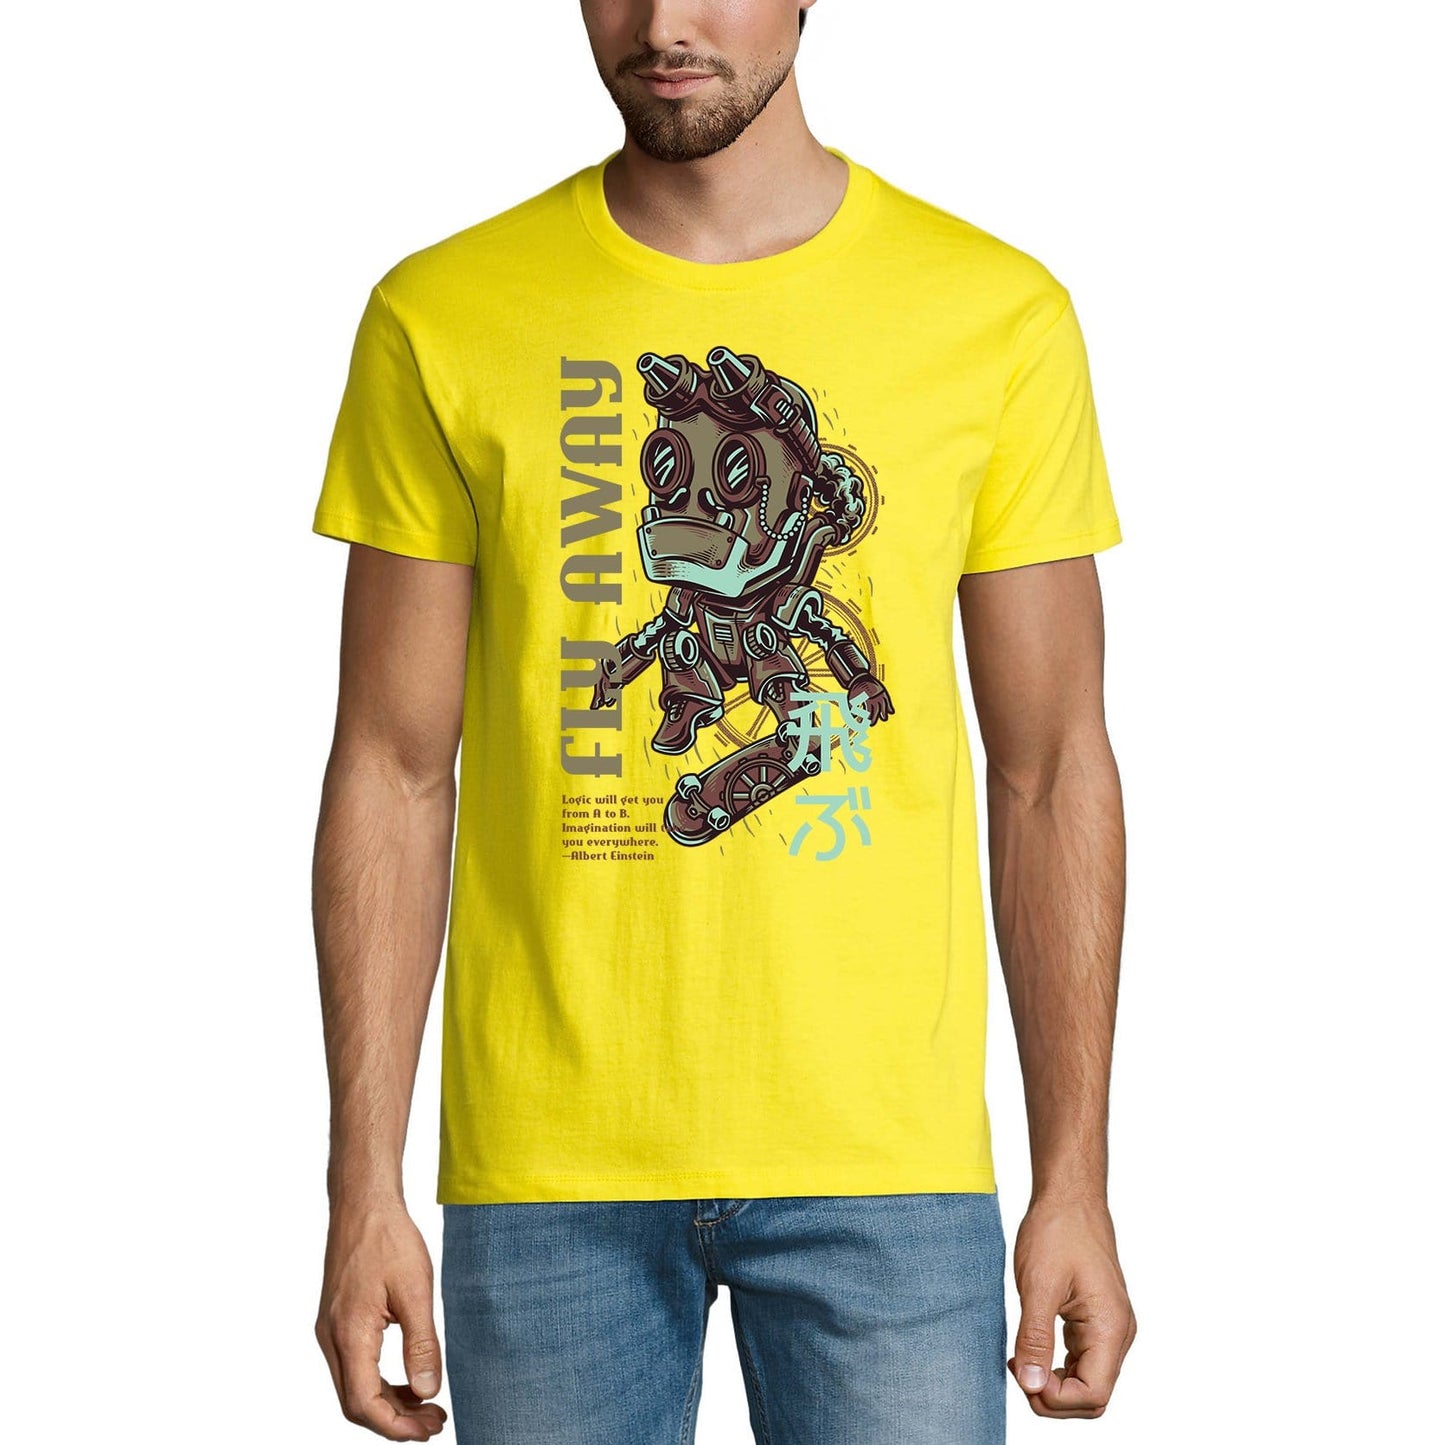 ULTRABASIC Men's Novelty T-Shirt Fly Away - Funny Robot Tee Shirt